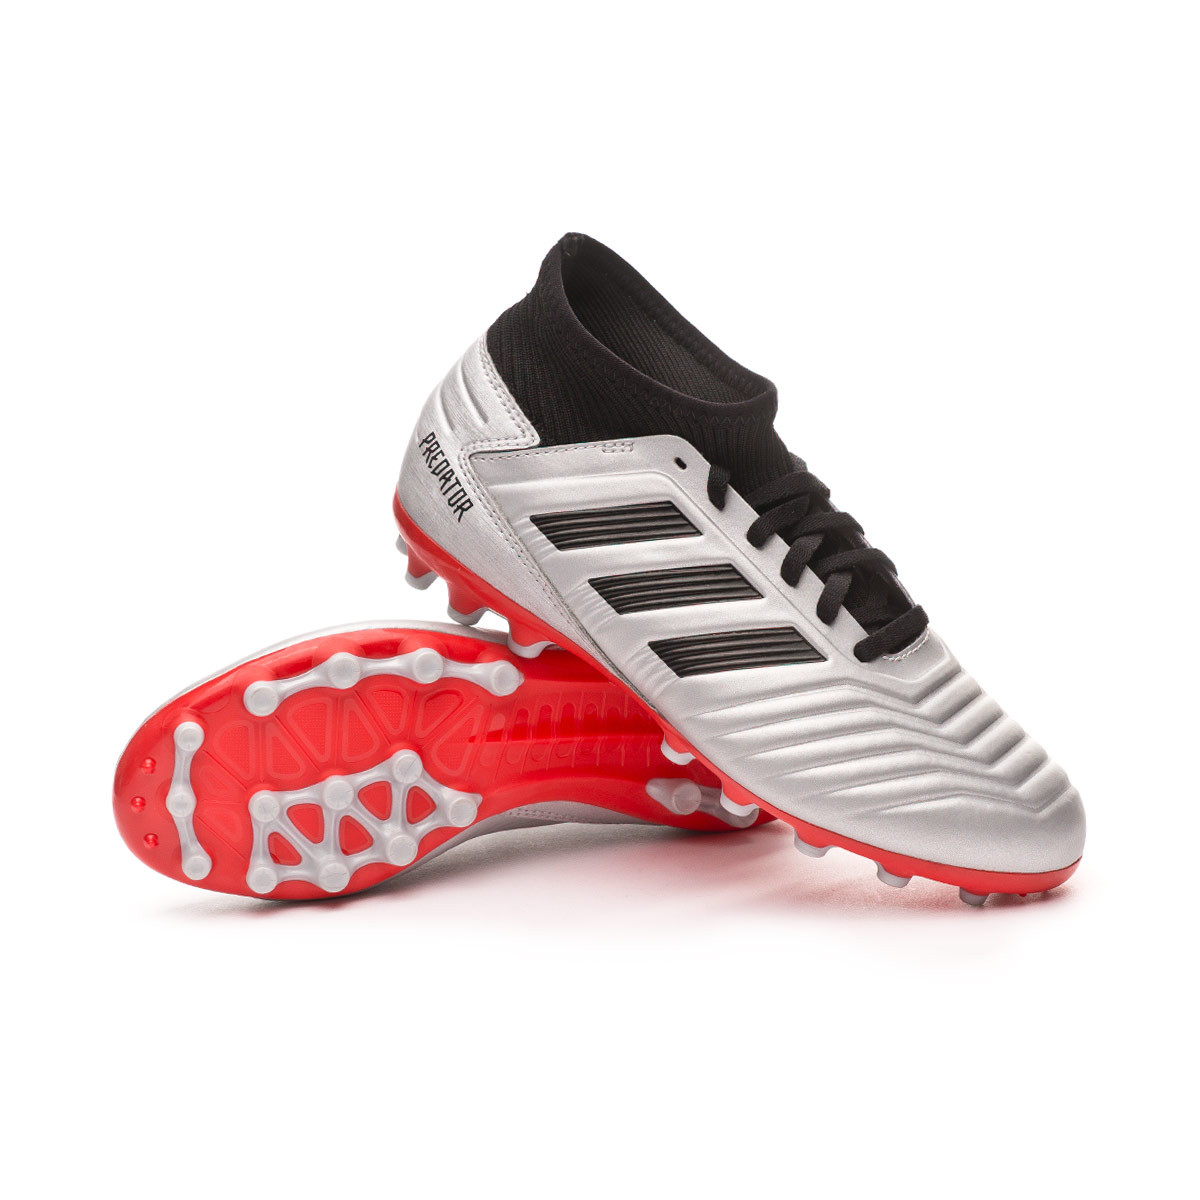 Football Boots adidas Kids Predator 19.3 AG Silver metallic-Core black-Hi  red - Football store Fútbol Emotion